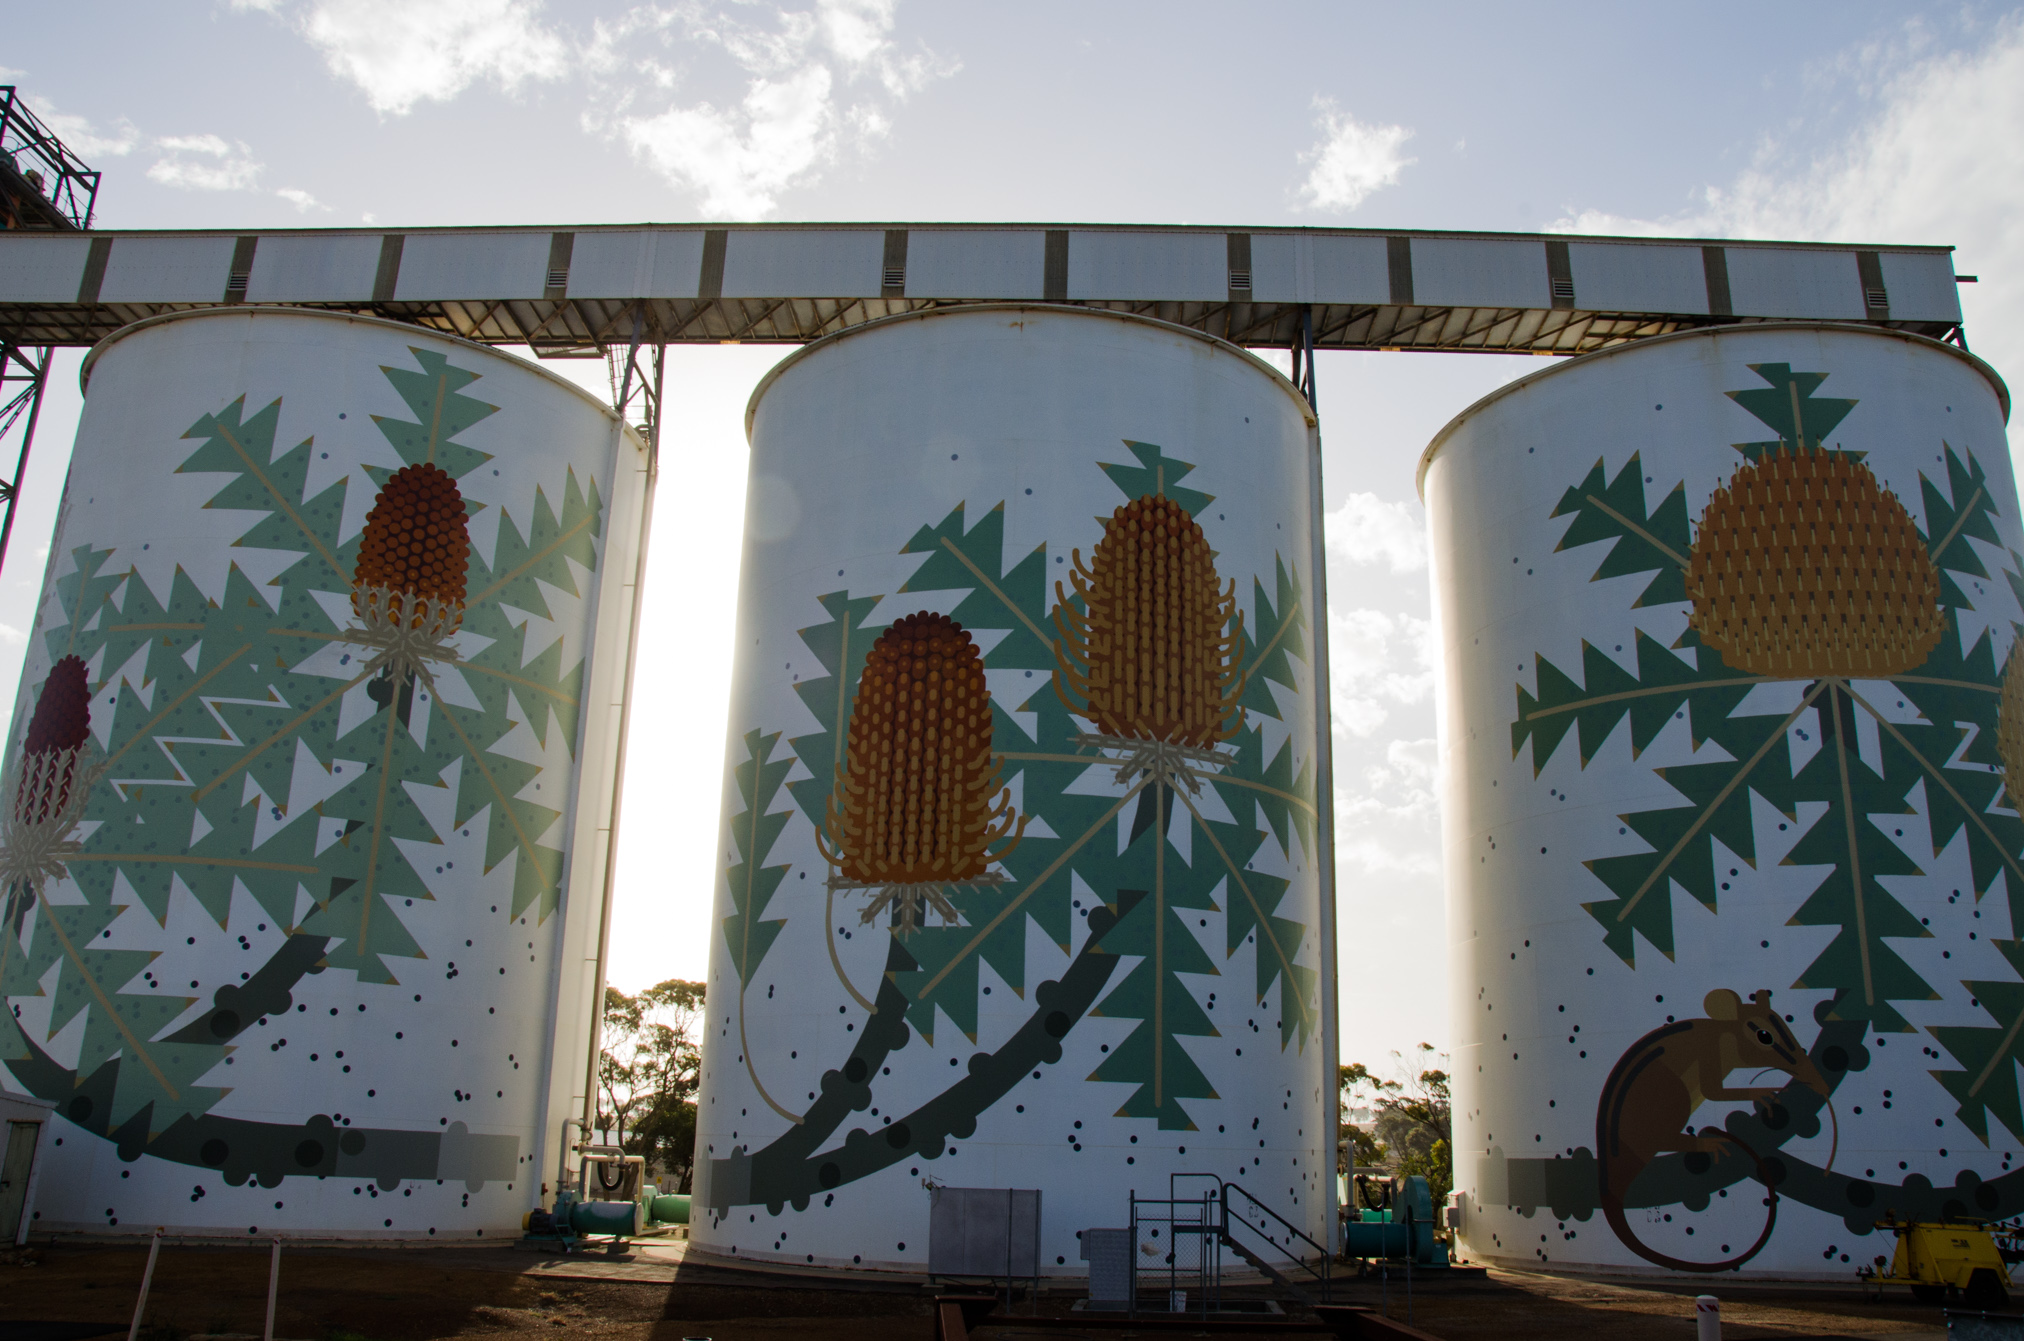 Grain silos at Ravensthorpe, Western Australia